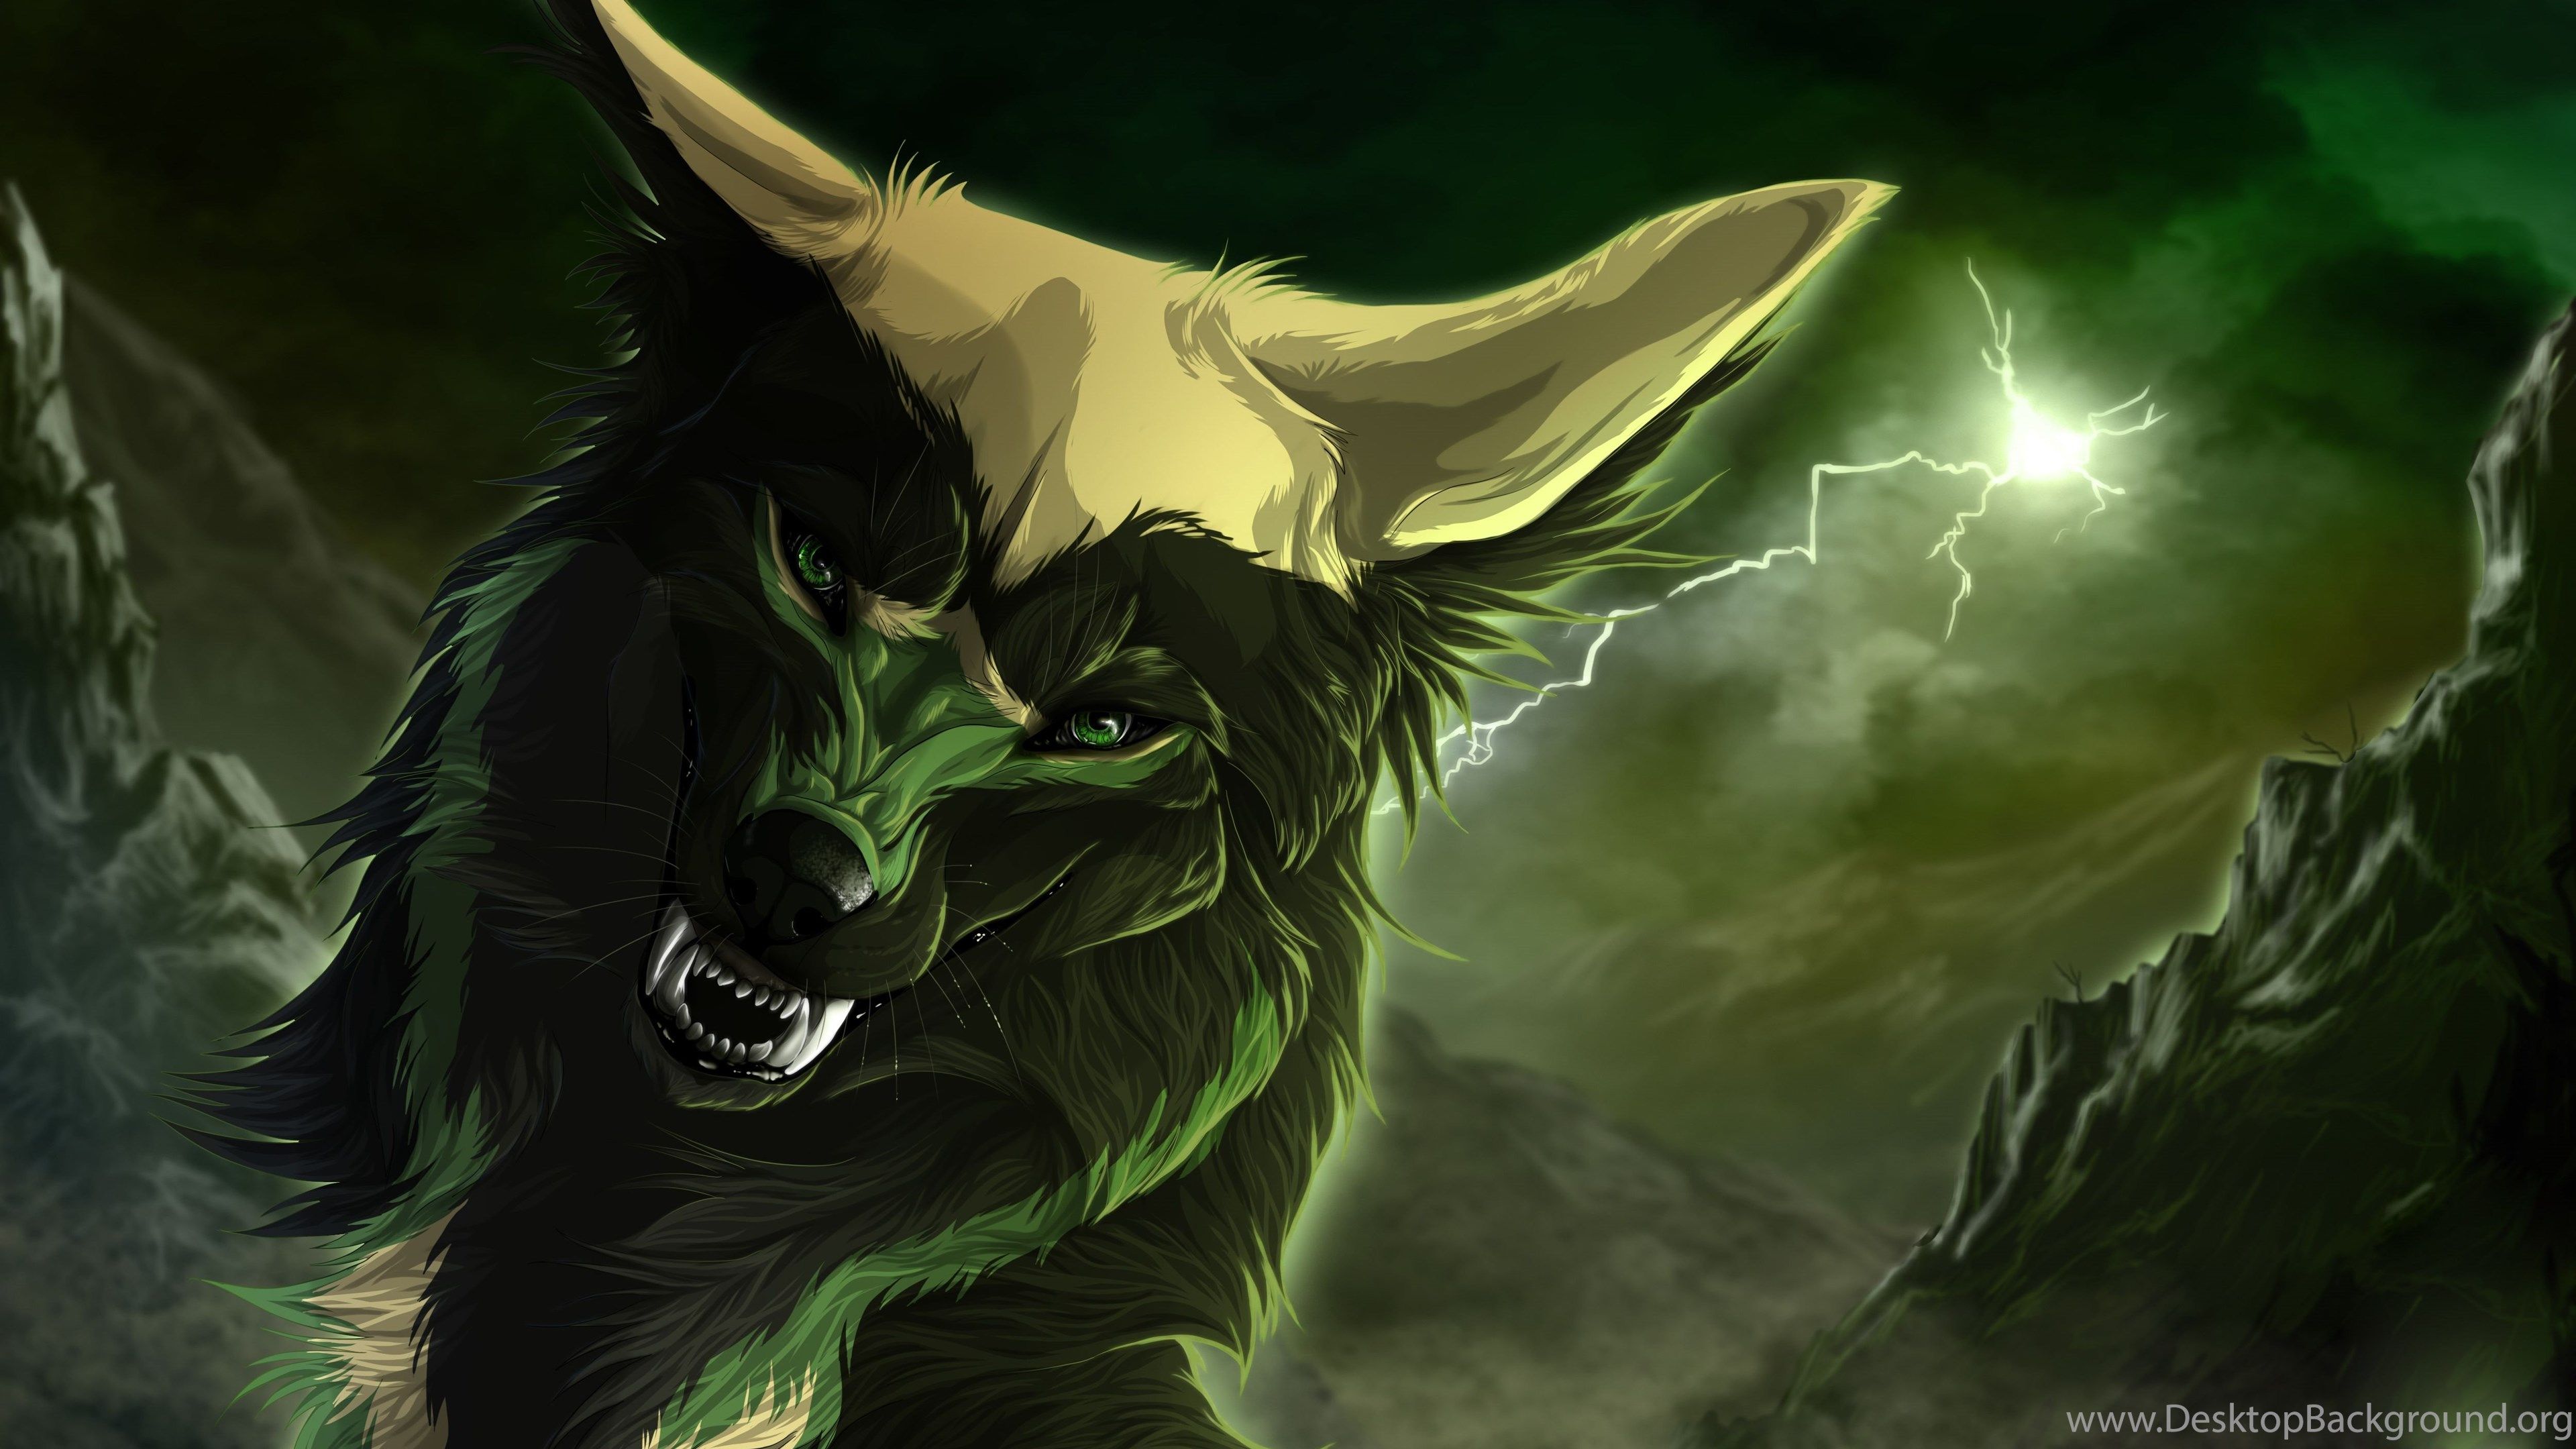 Cool animated wolf image Desktop Background